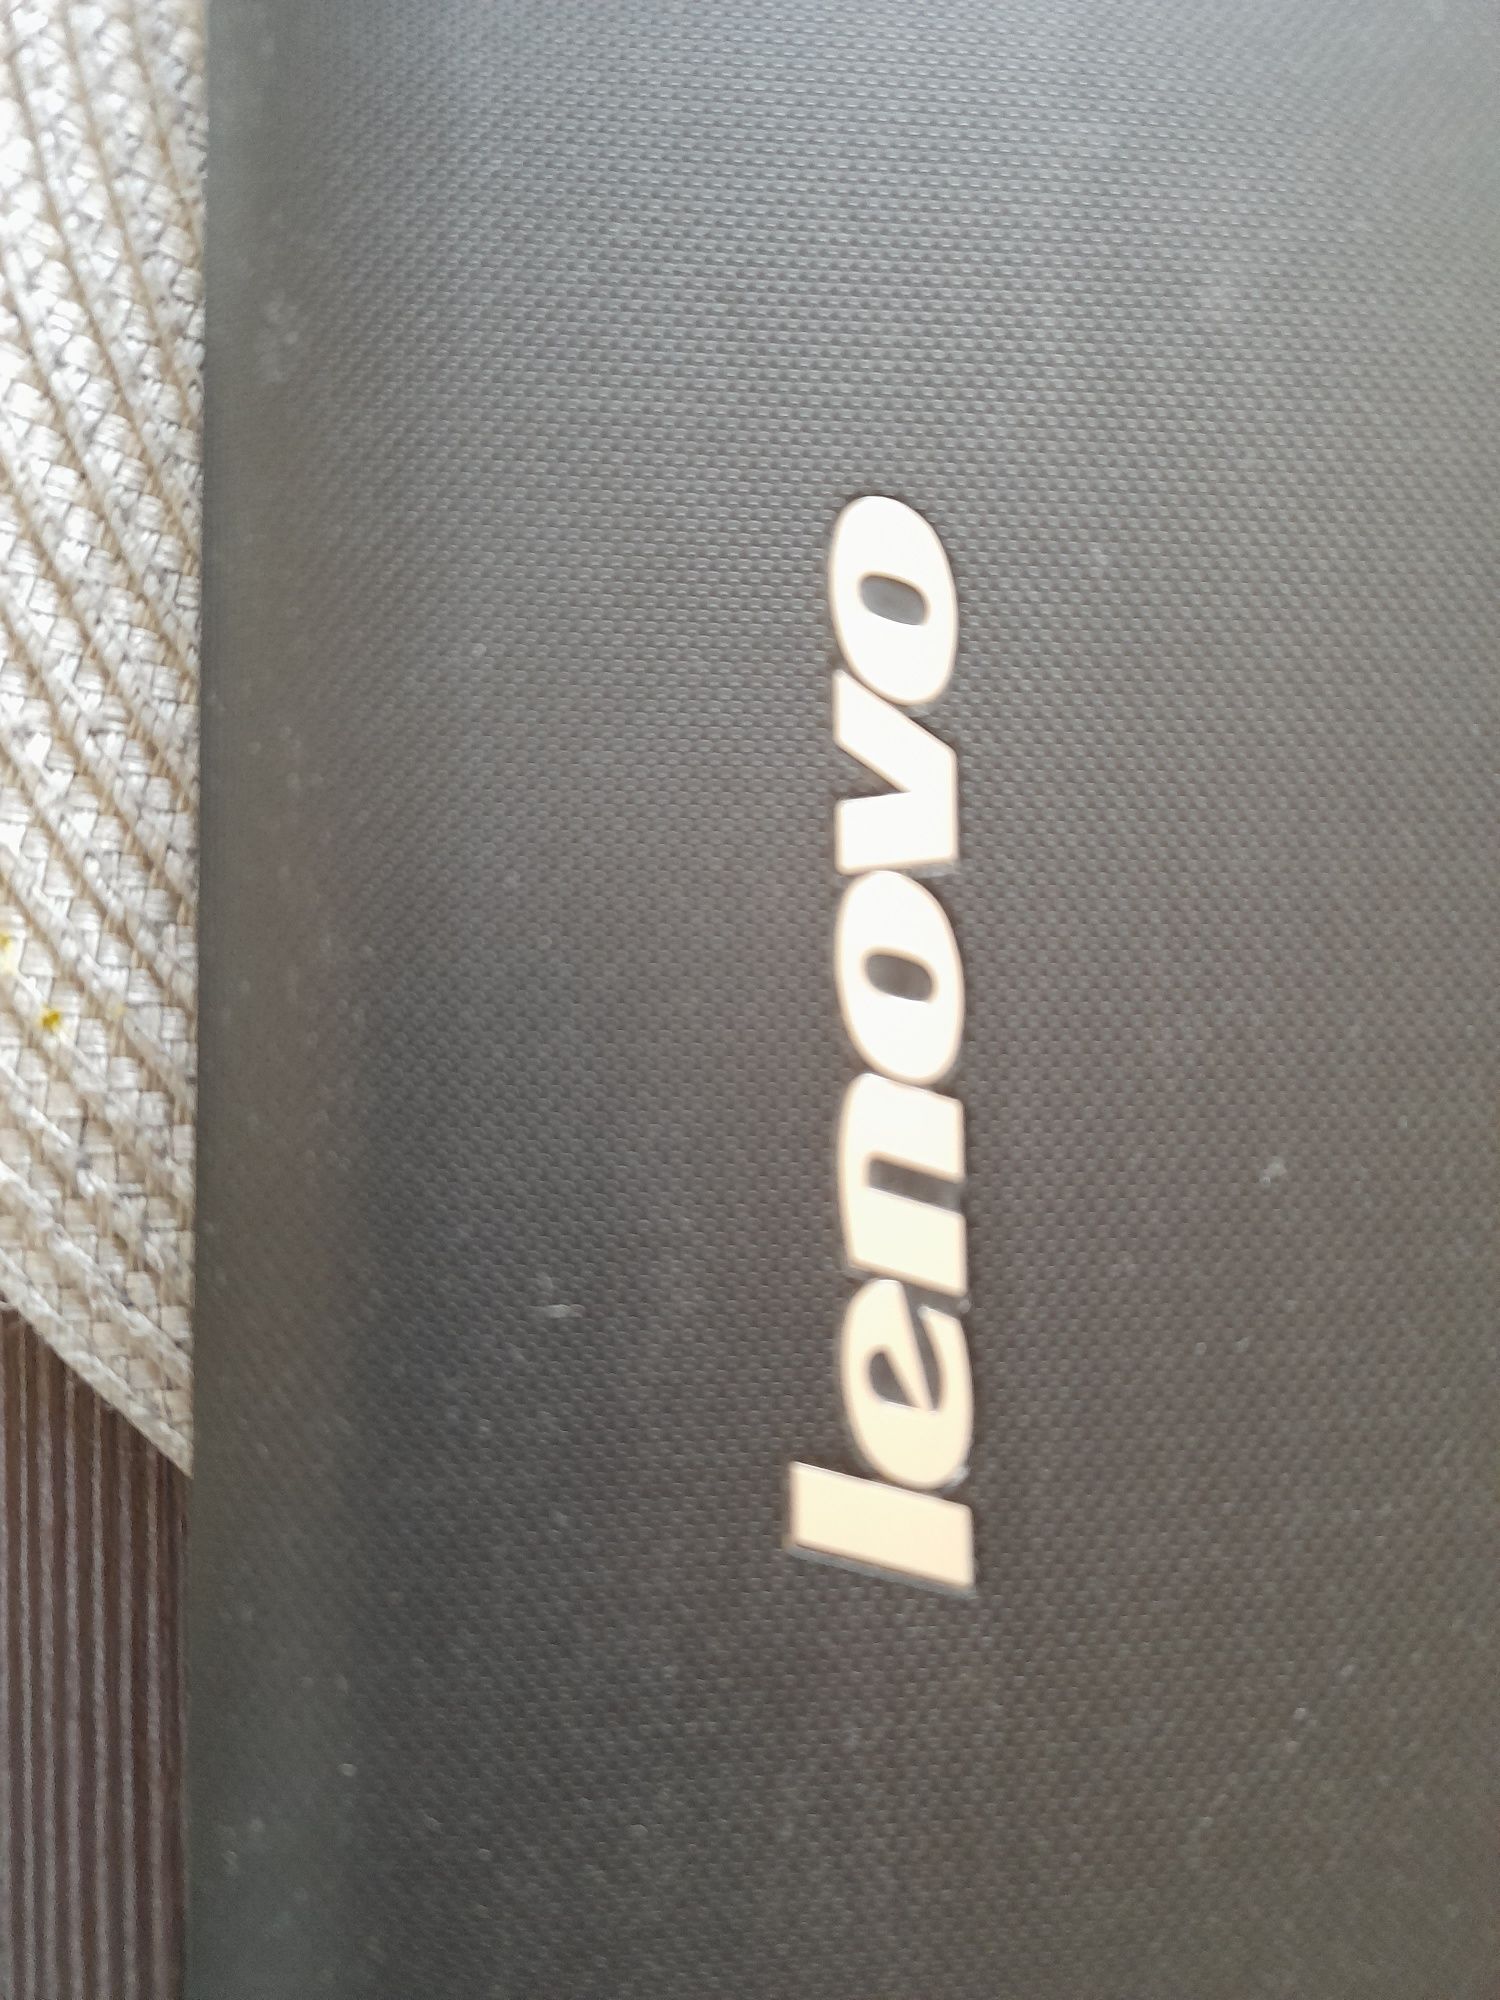 Laptop Lenowo G50 z ładowarką